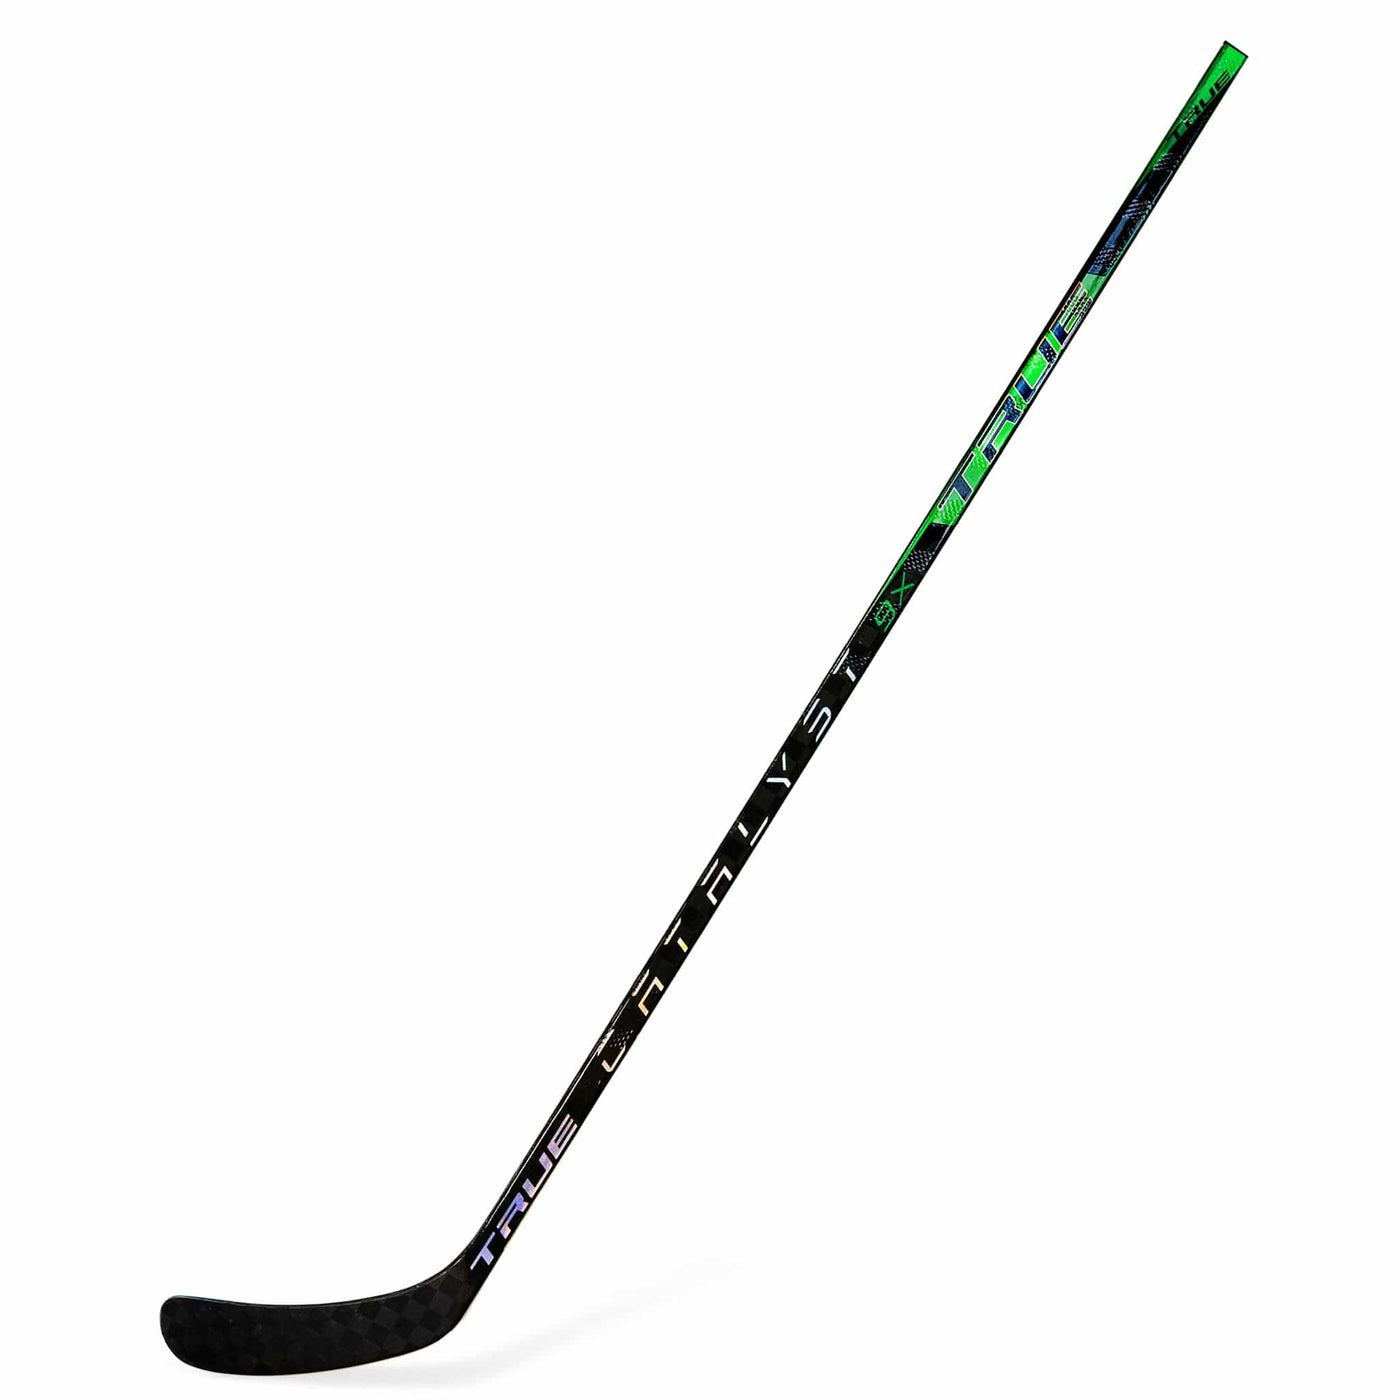 TRUE Catalyst 9X Pro Stock Senior Hockey Stick - Tyler Seguin - The Hockey Shop Source For Sports